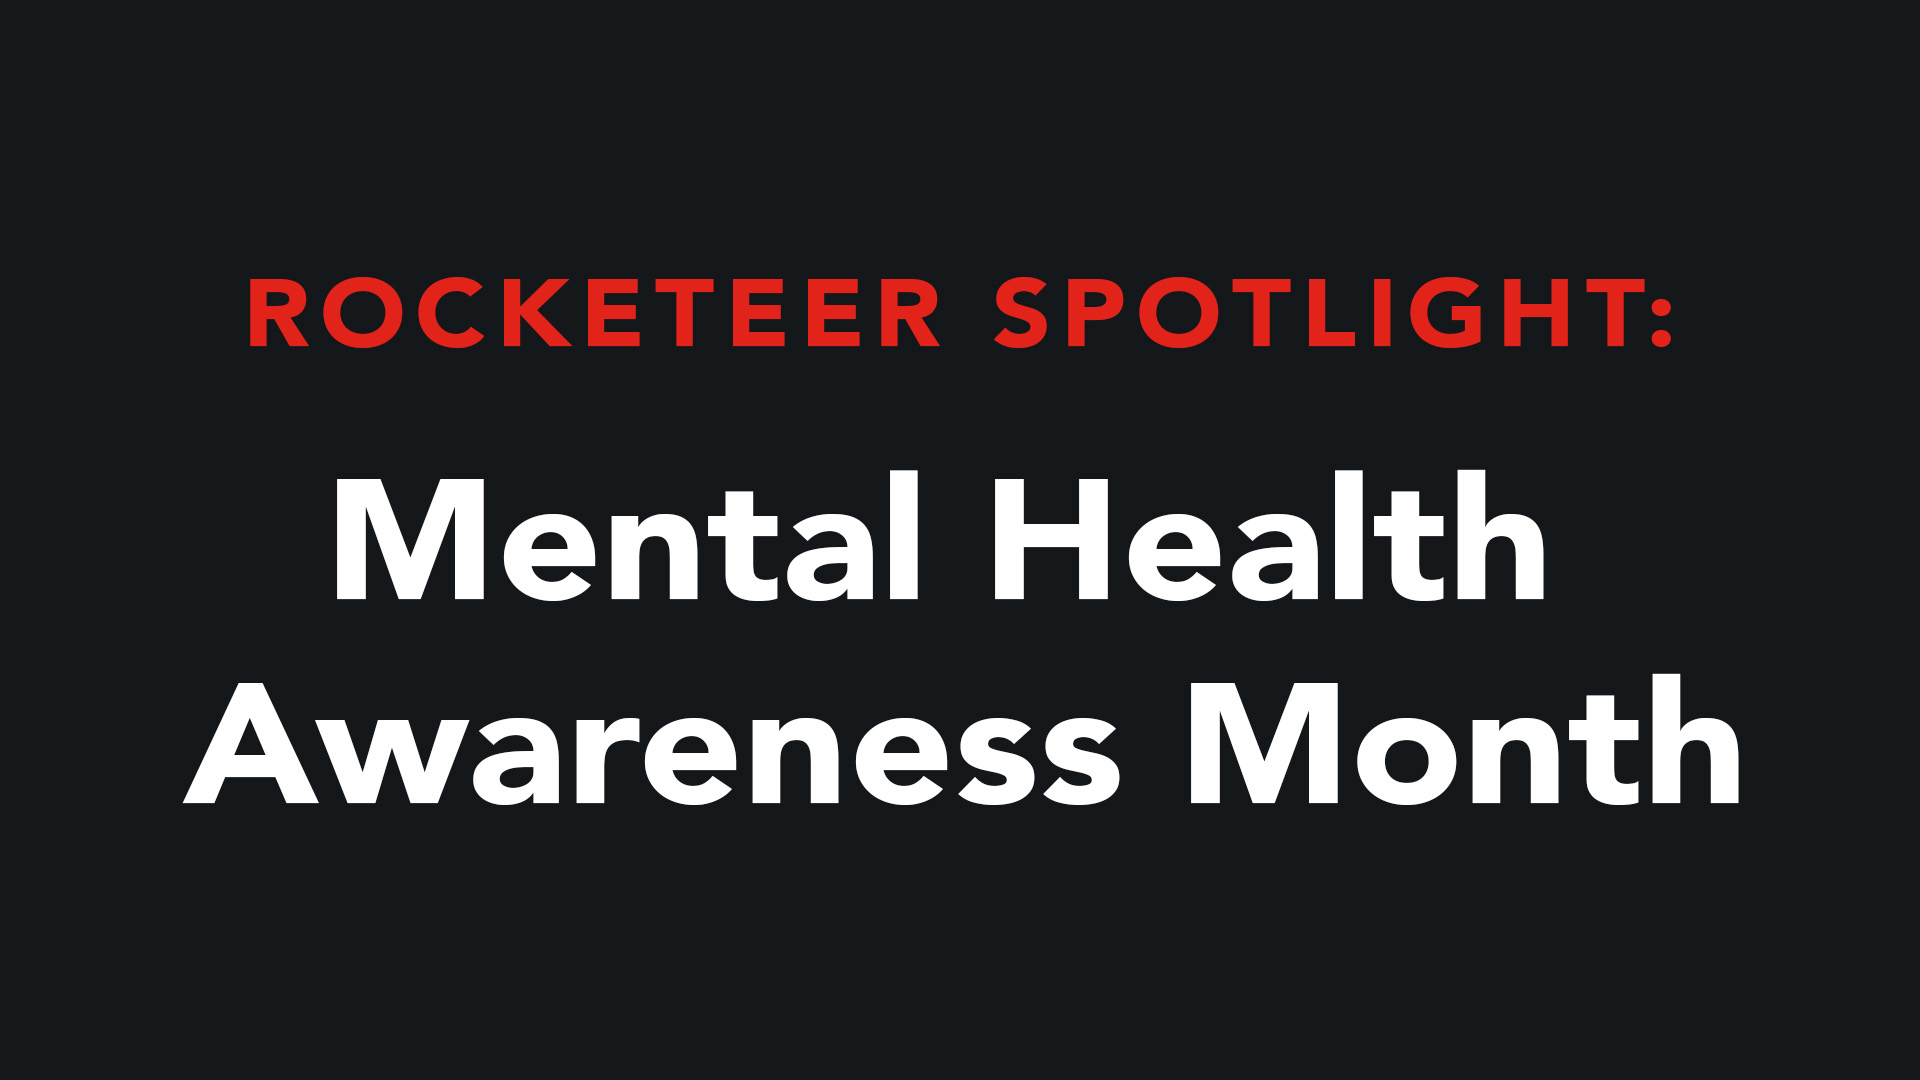 Mental Health Awareness Month on Black Background